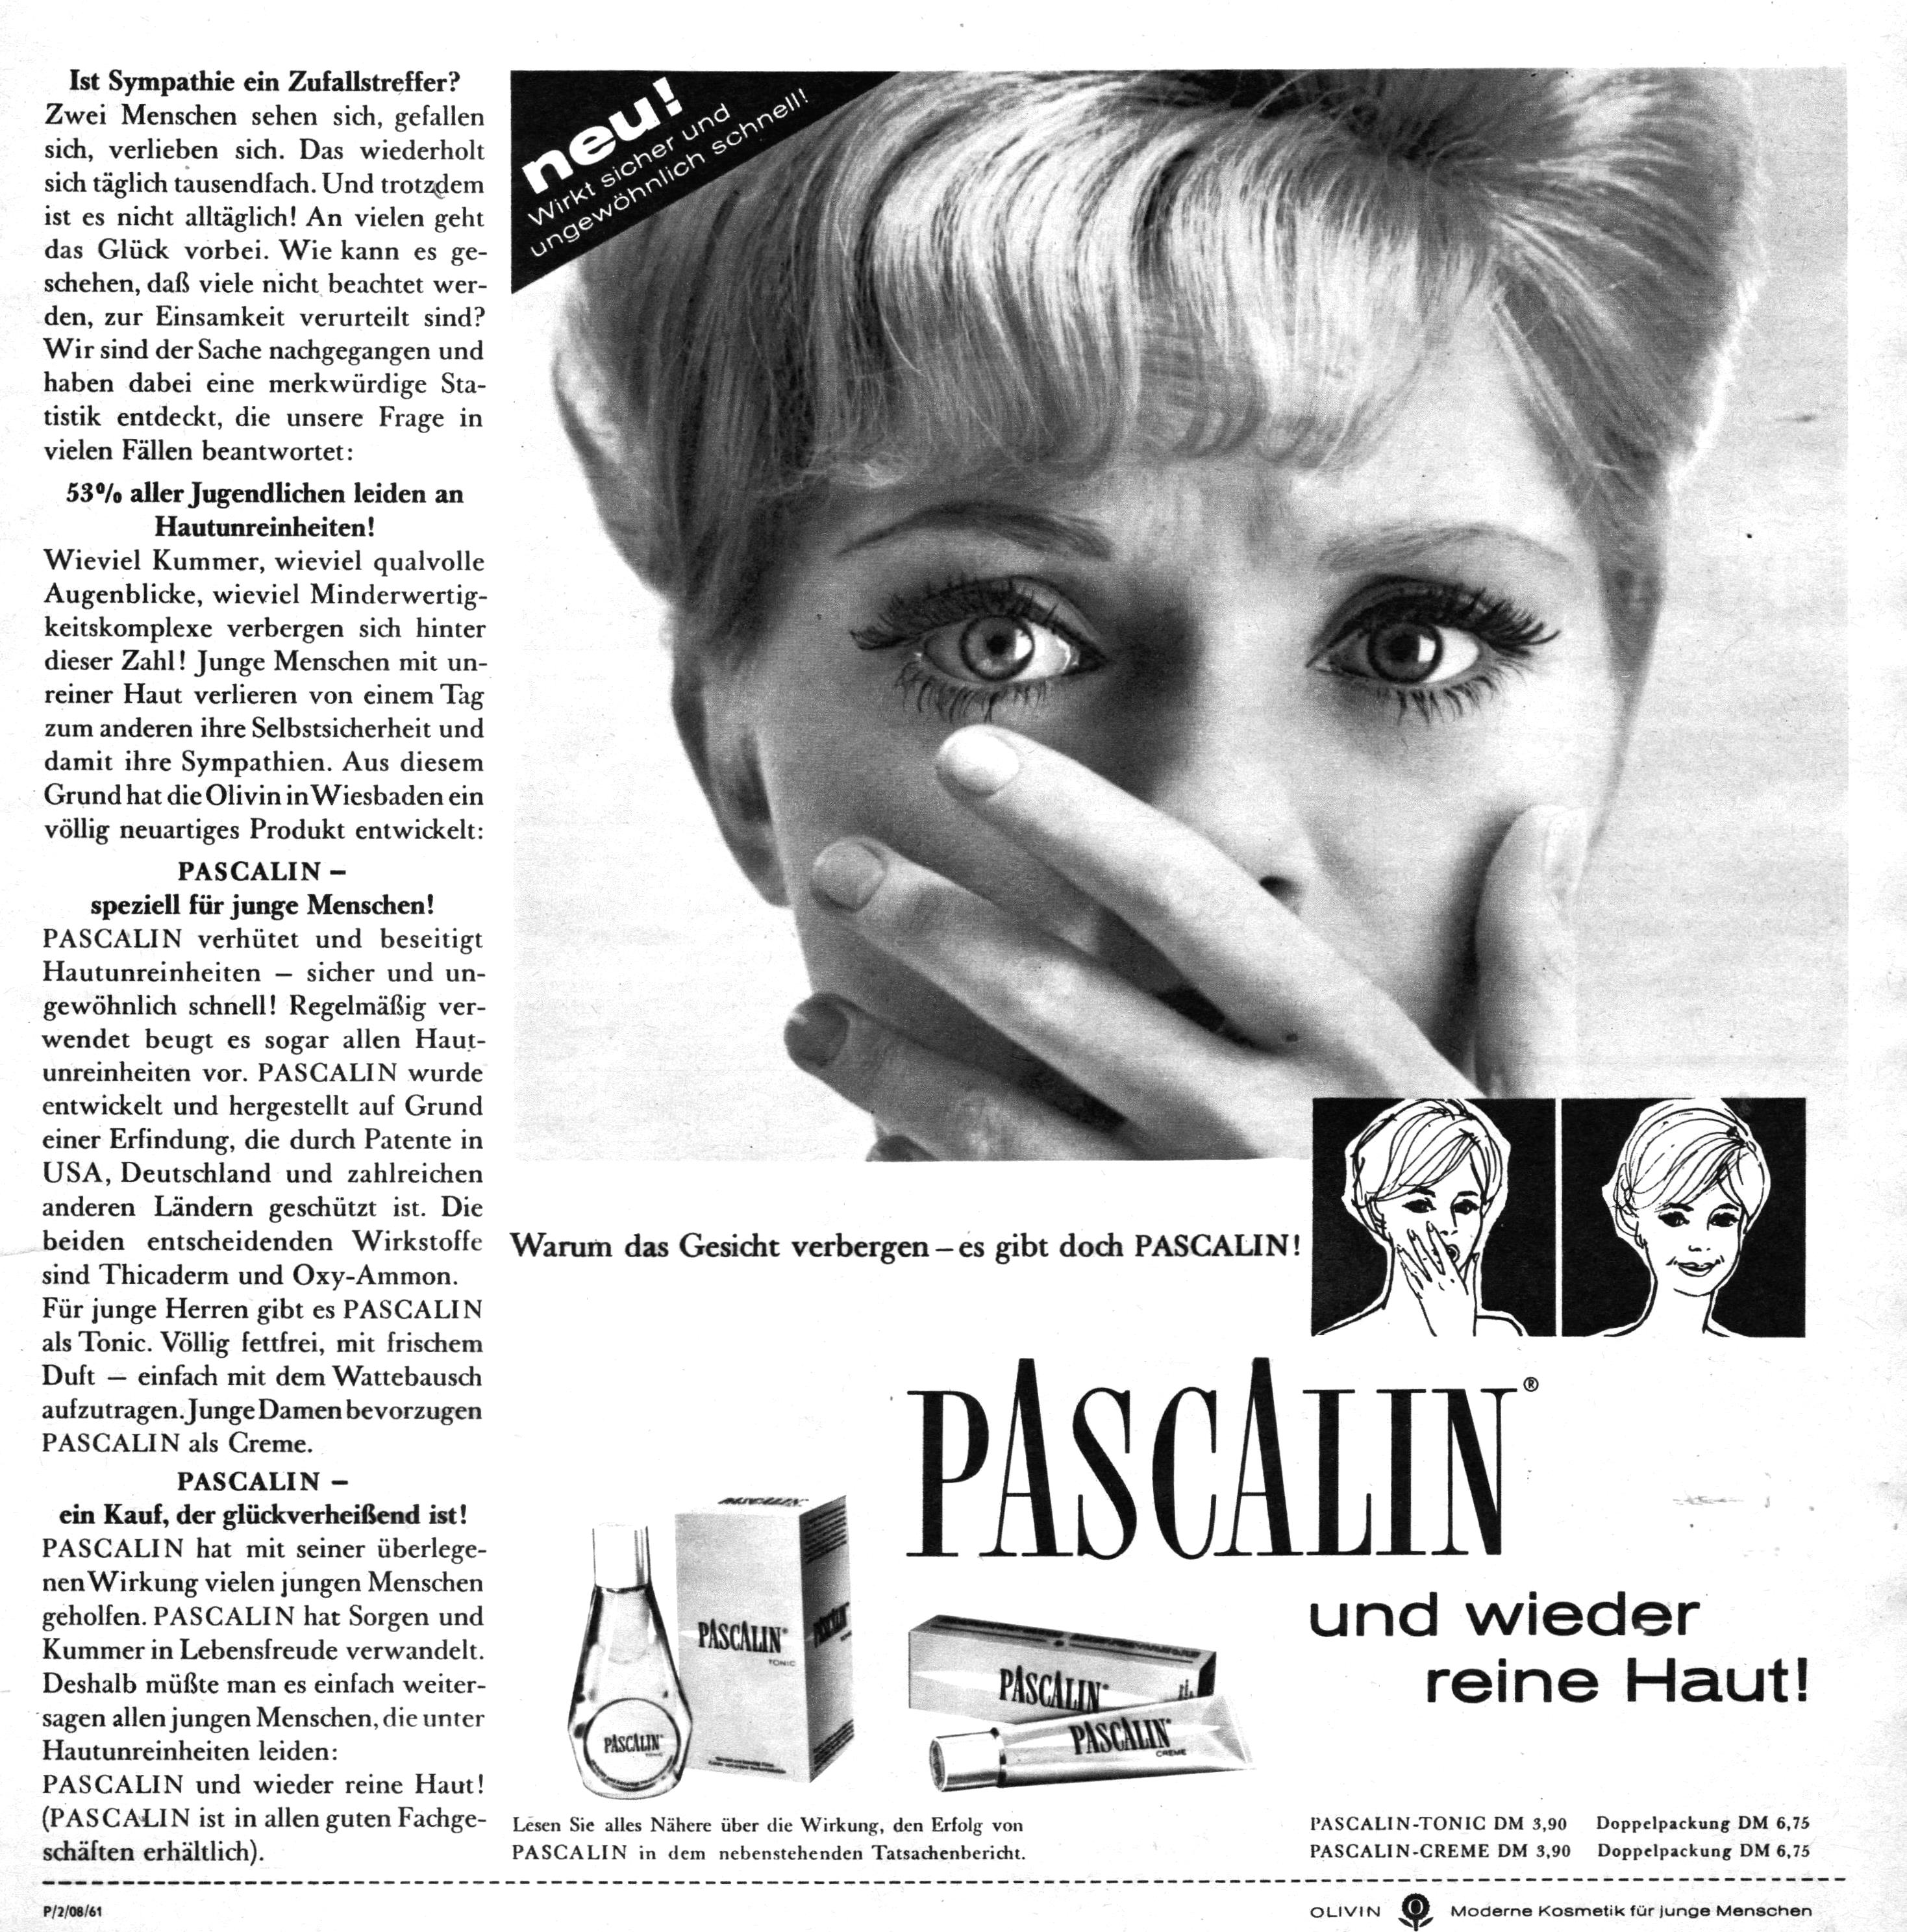 Pascalin 1961 108.jpg